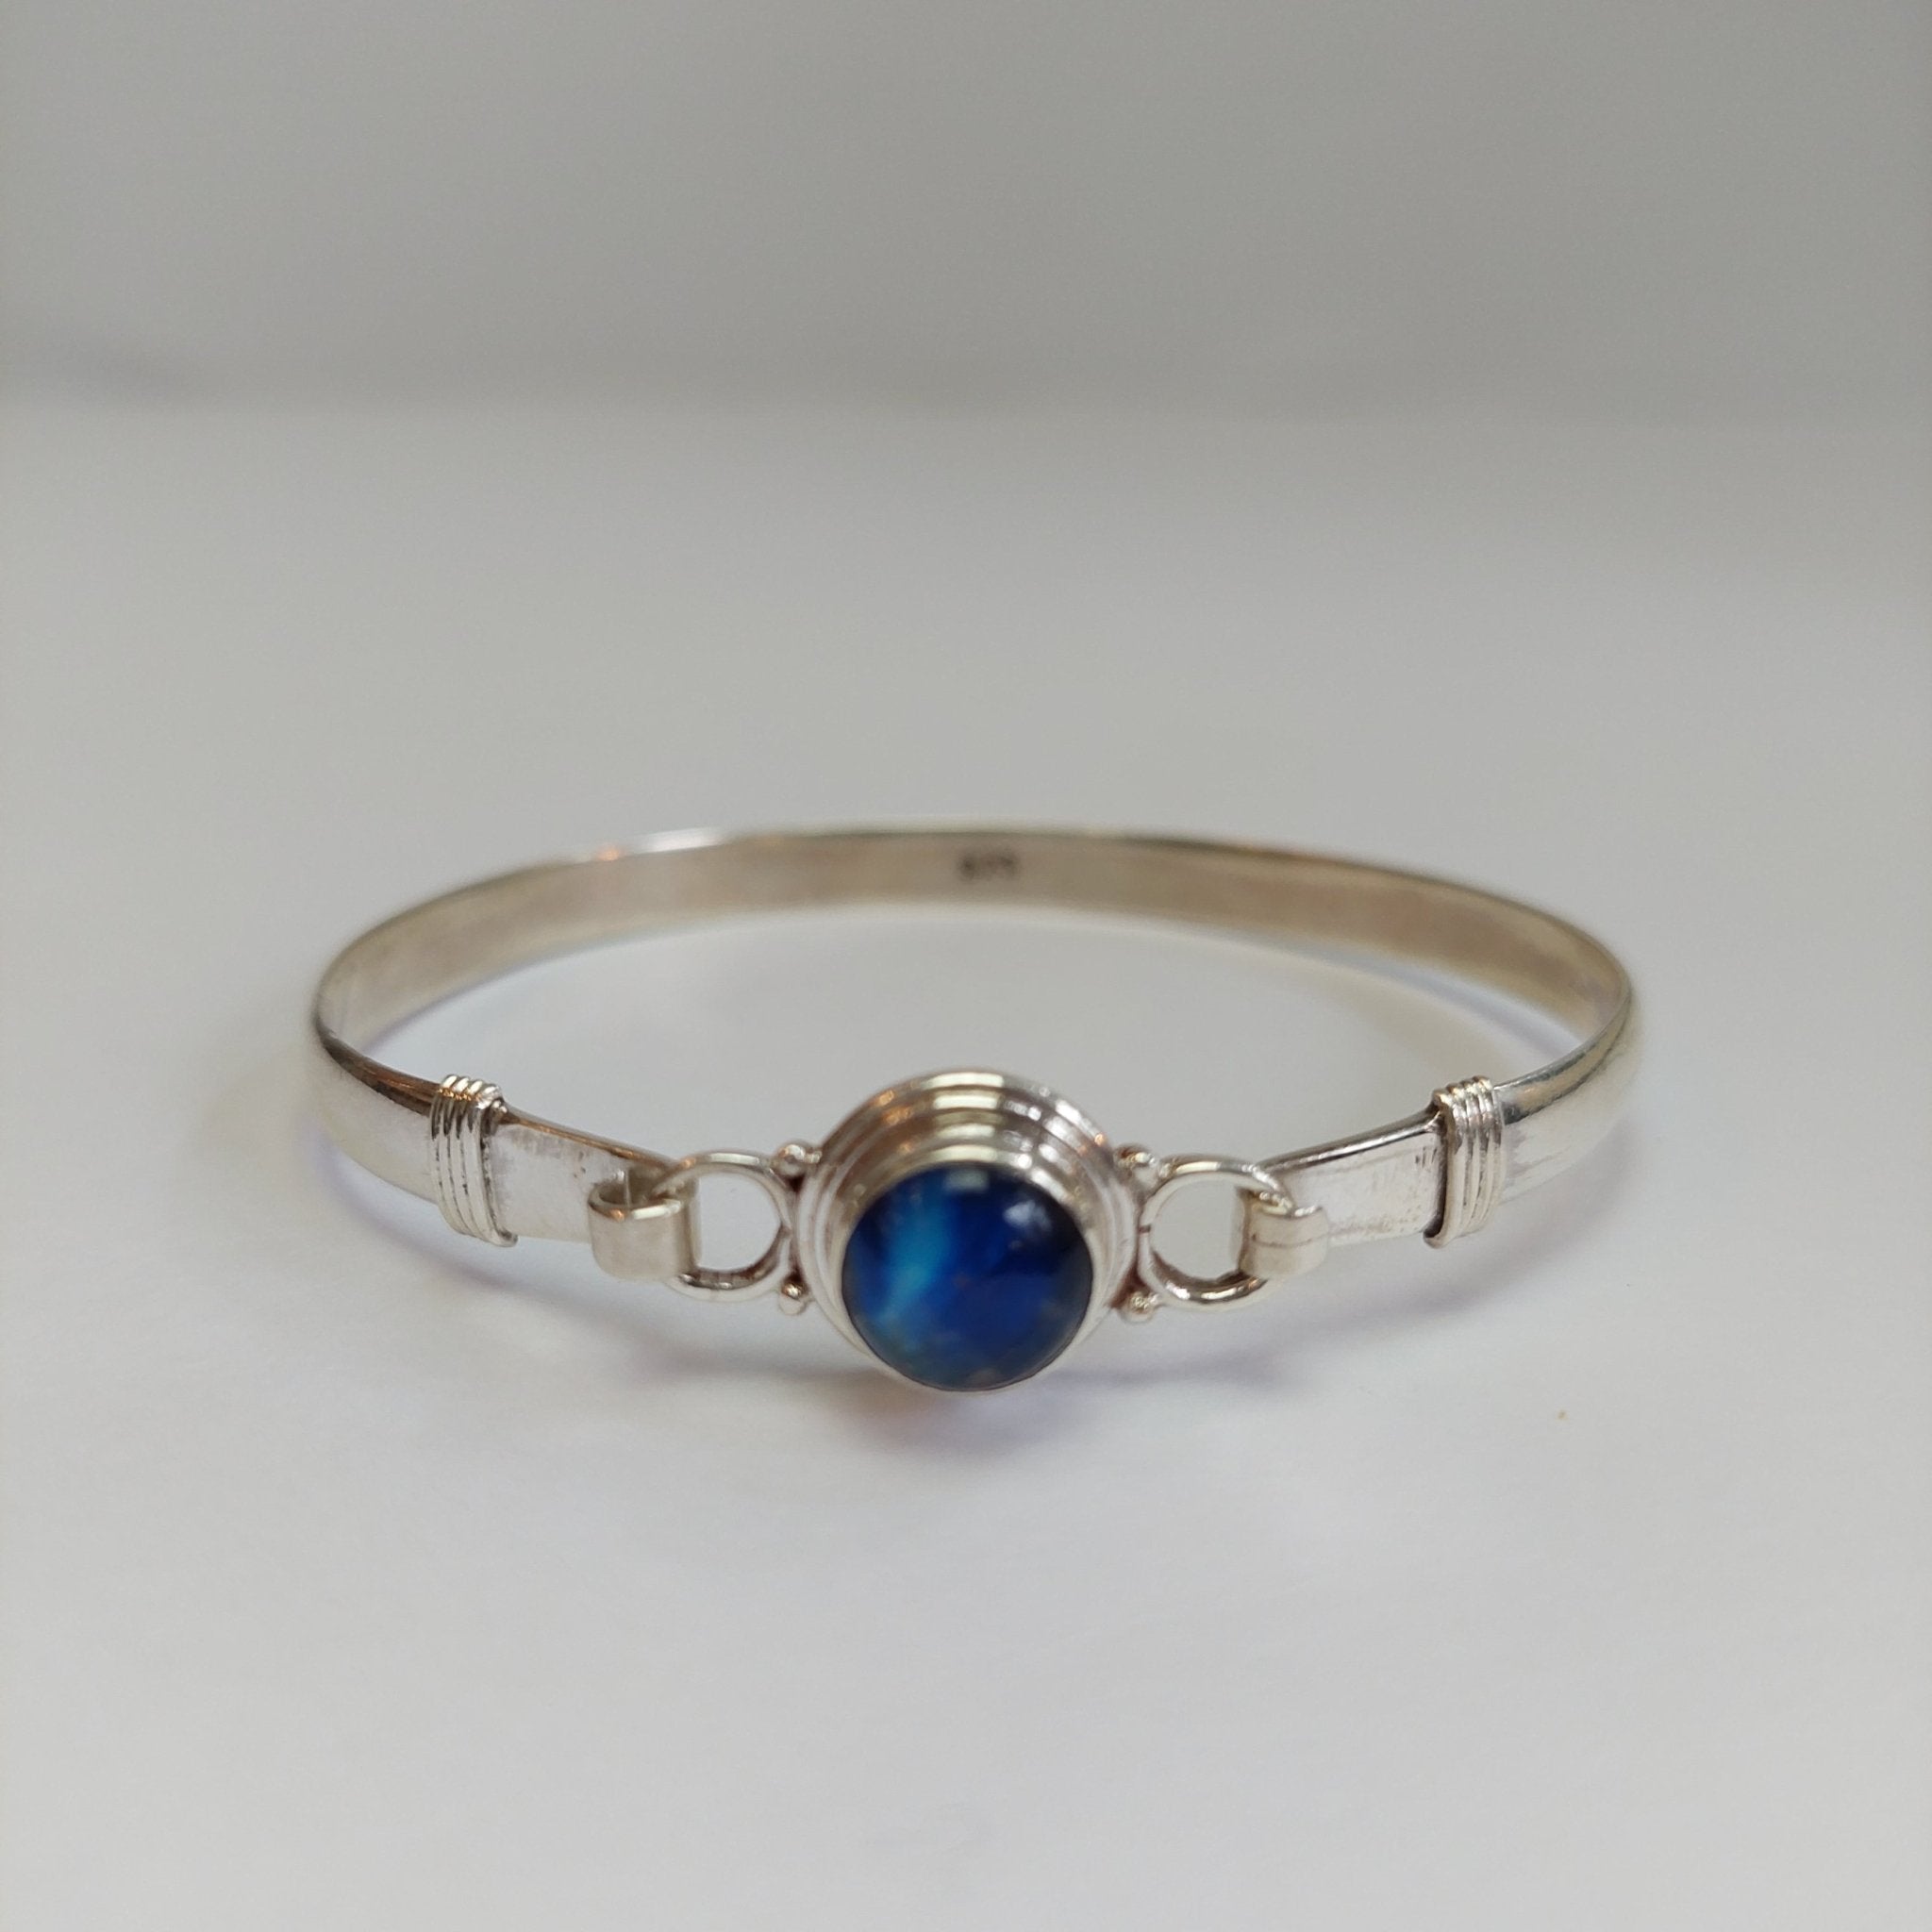 Blue Moonstone Bangle - The Nancy Smillie Shop - Art, Jewellery & Designer Gifts Glasgow